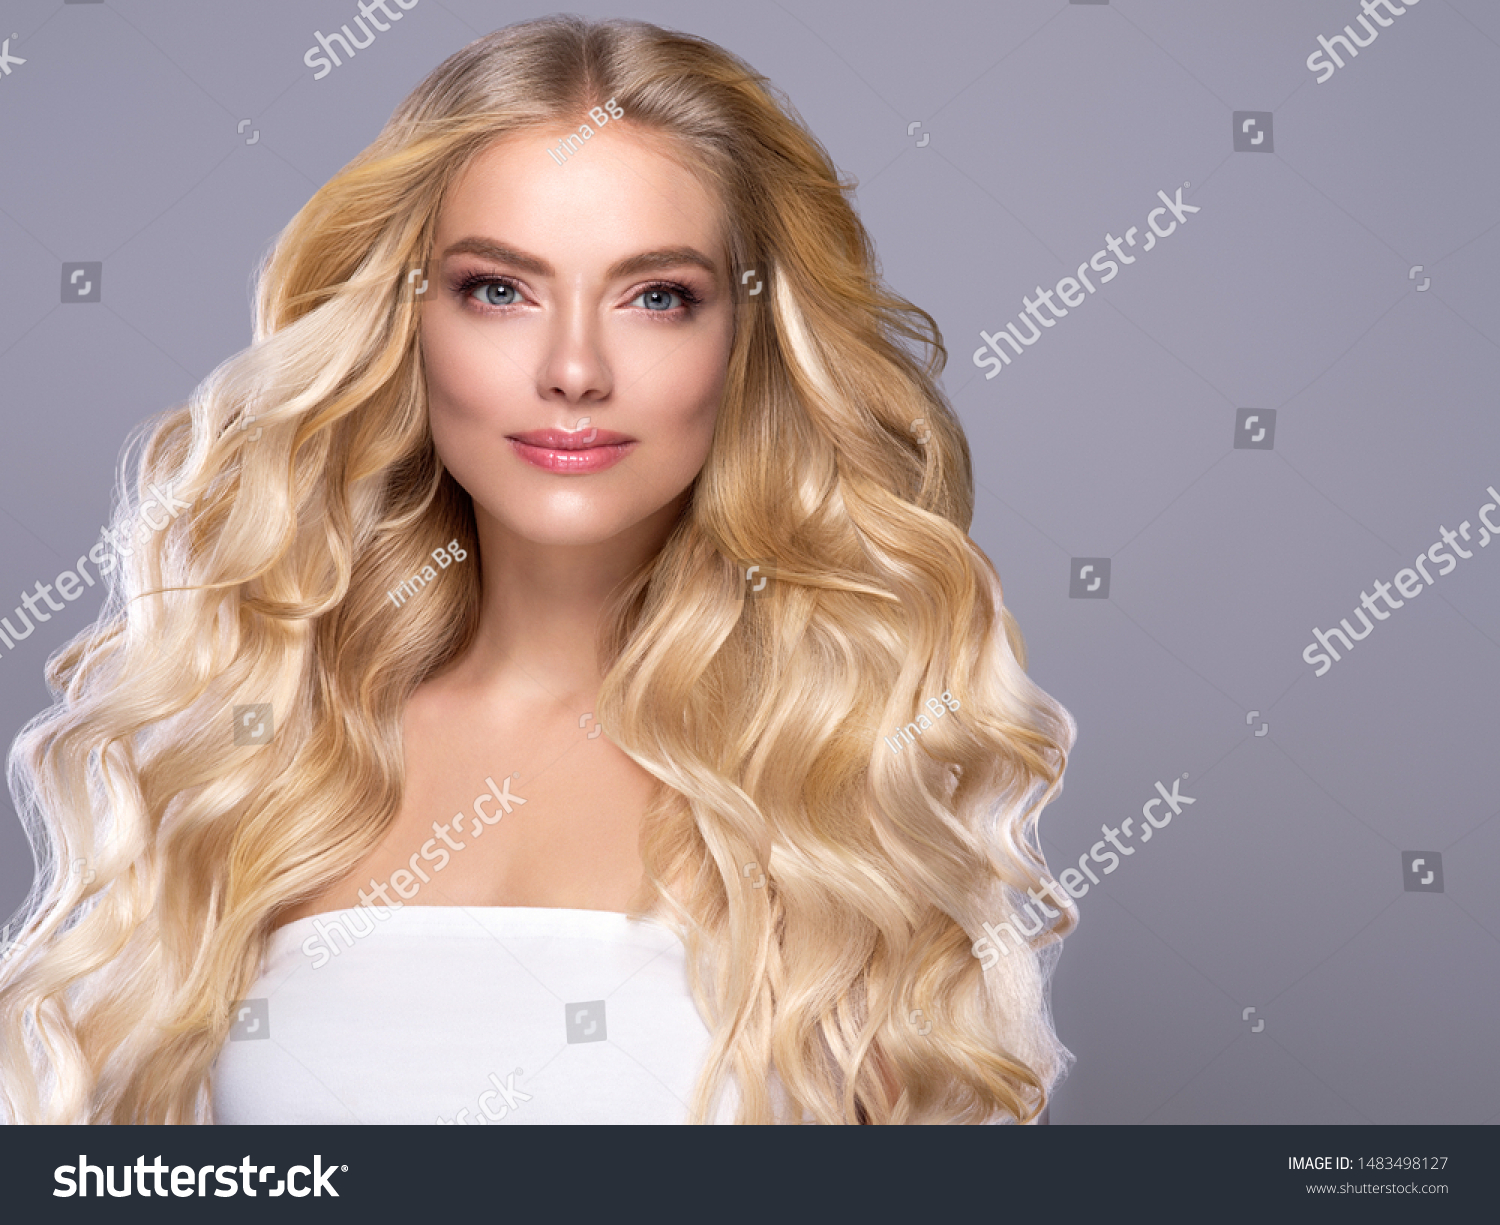 Blonde Hair Woman Beauty Girl Model Stock Photo Edit Now 1483498127